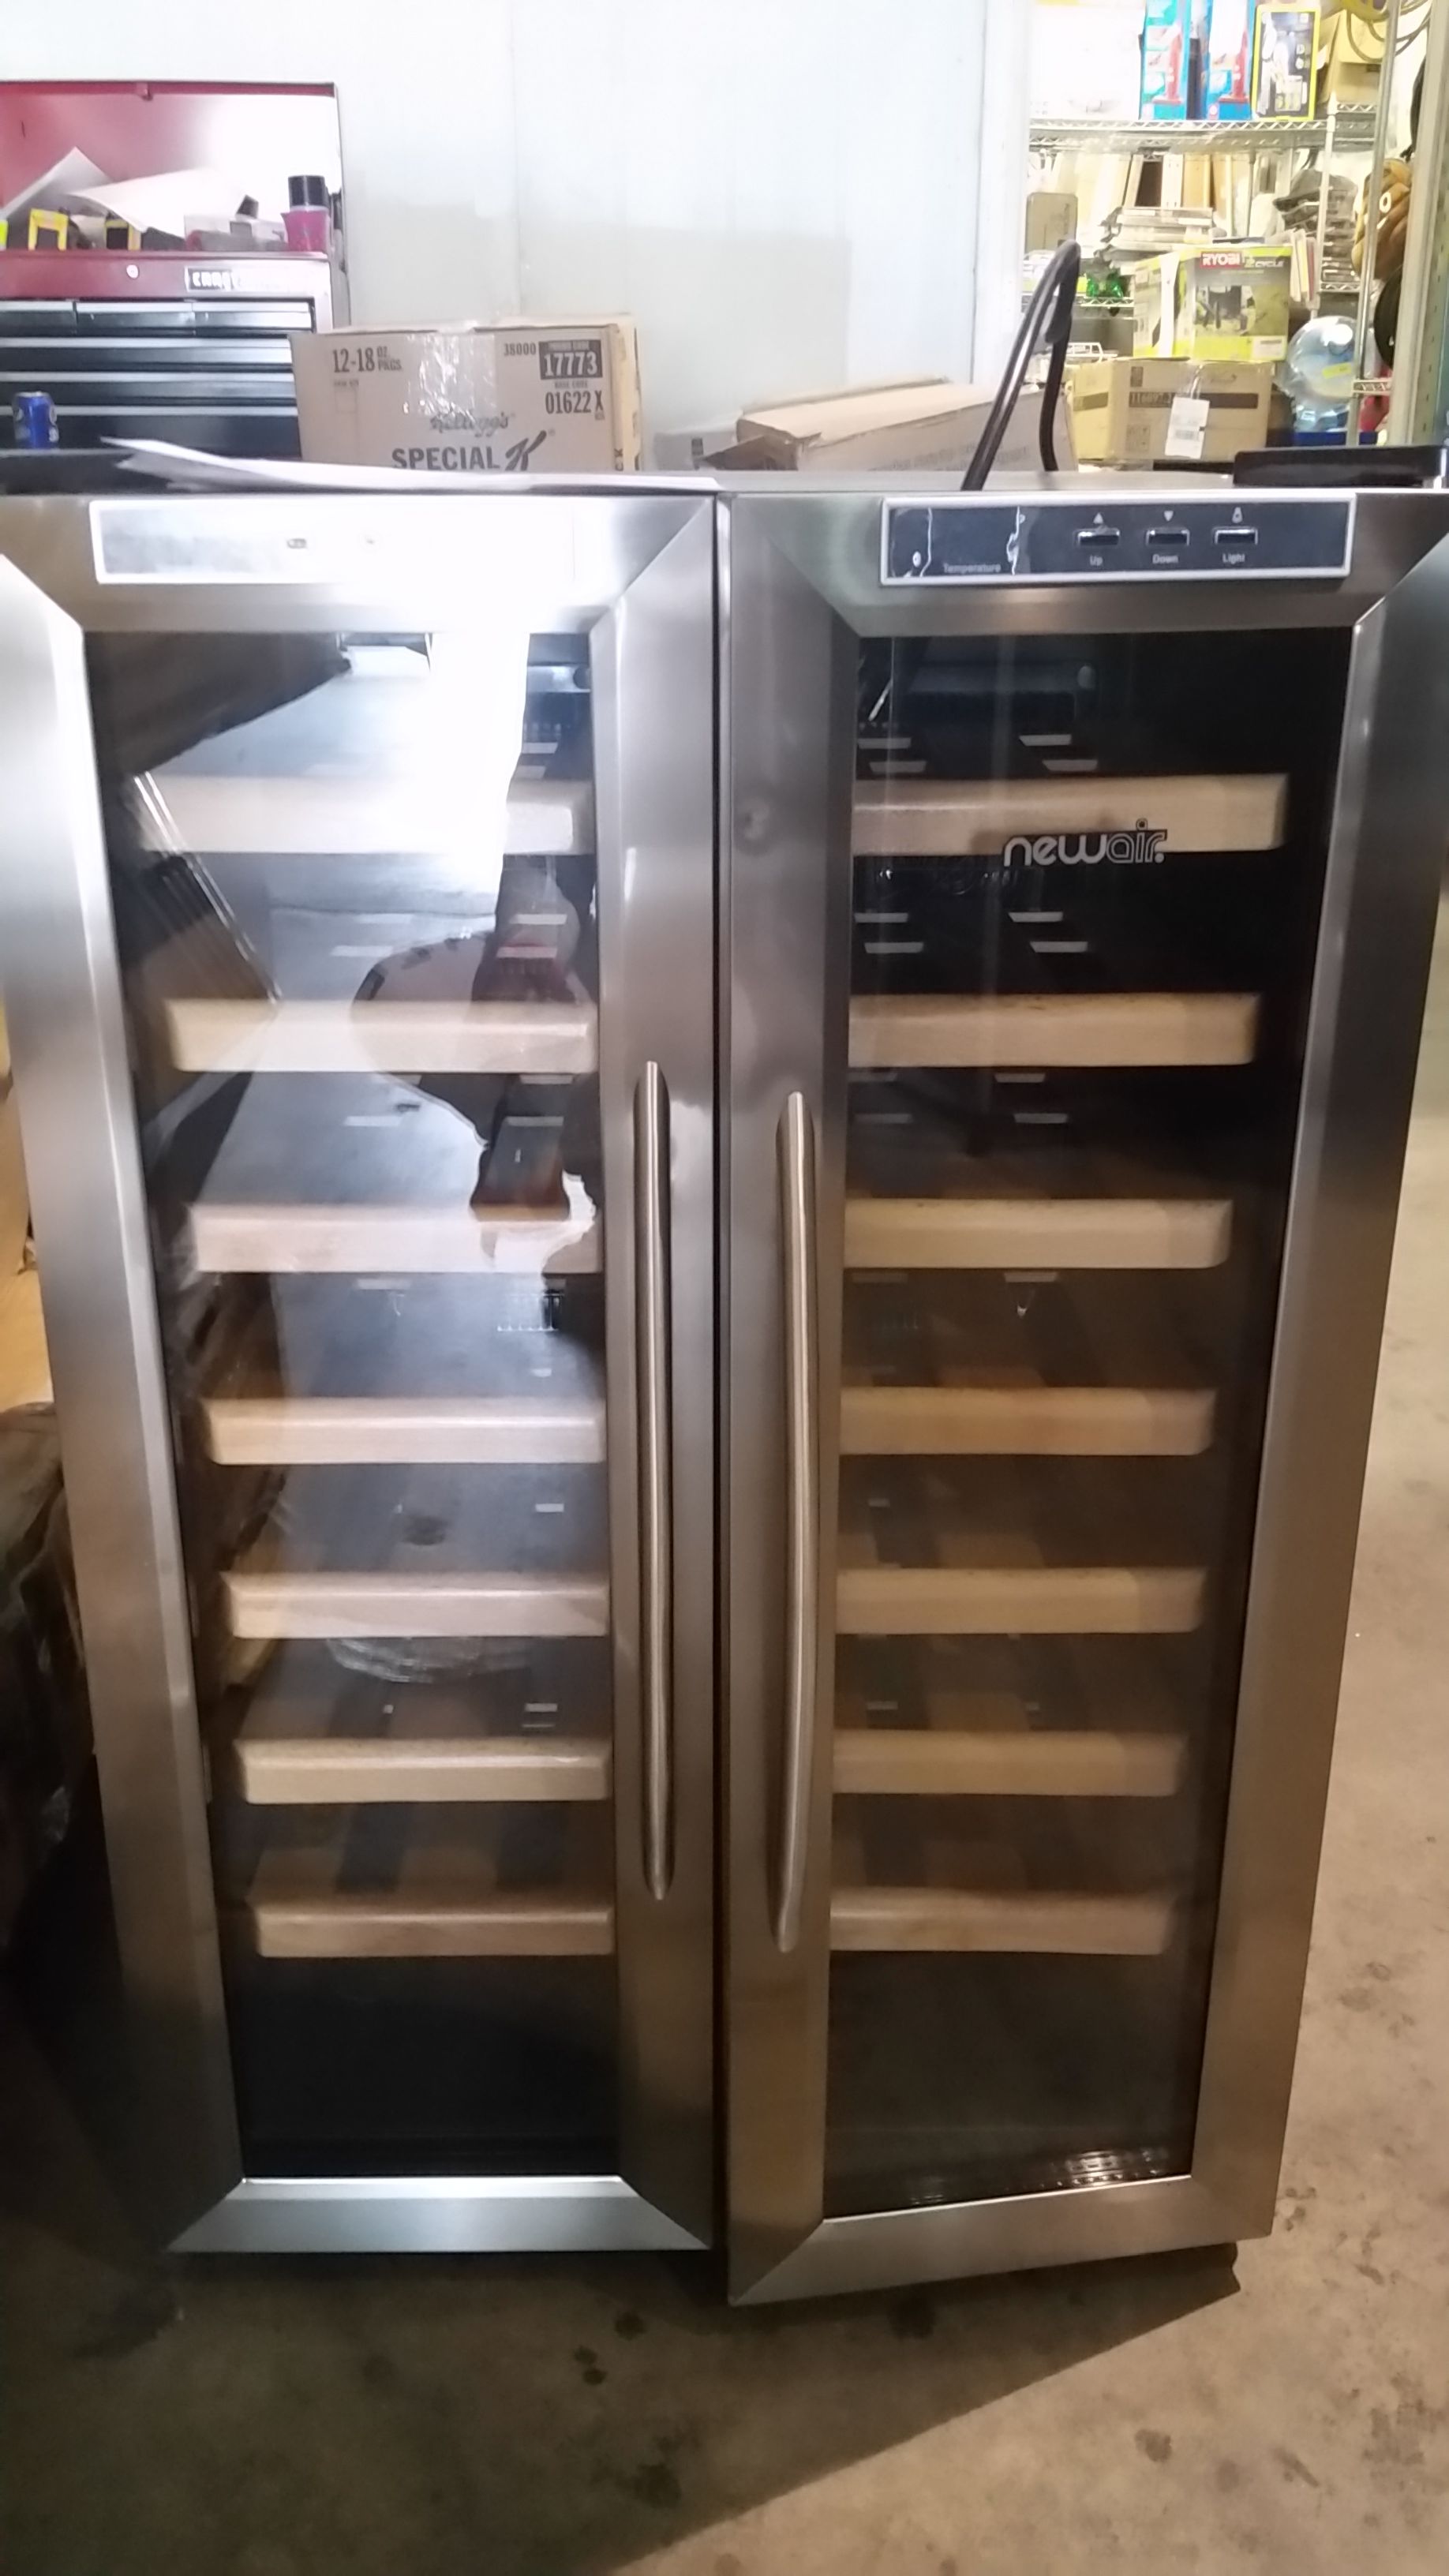 Brand new wine rack refrigerator with wood racks very nice